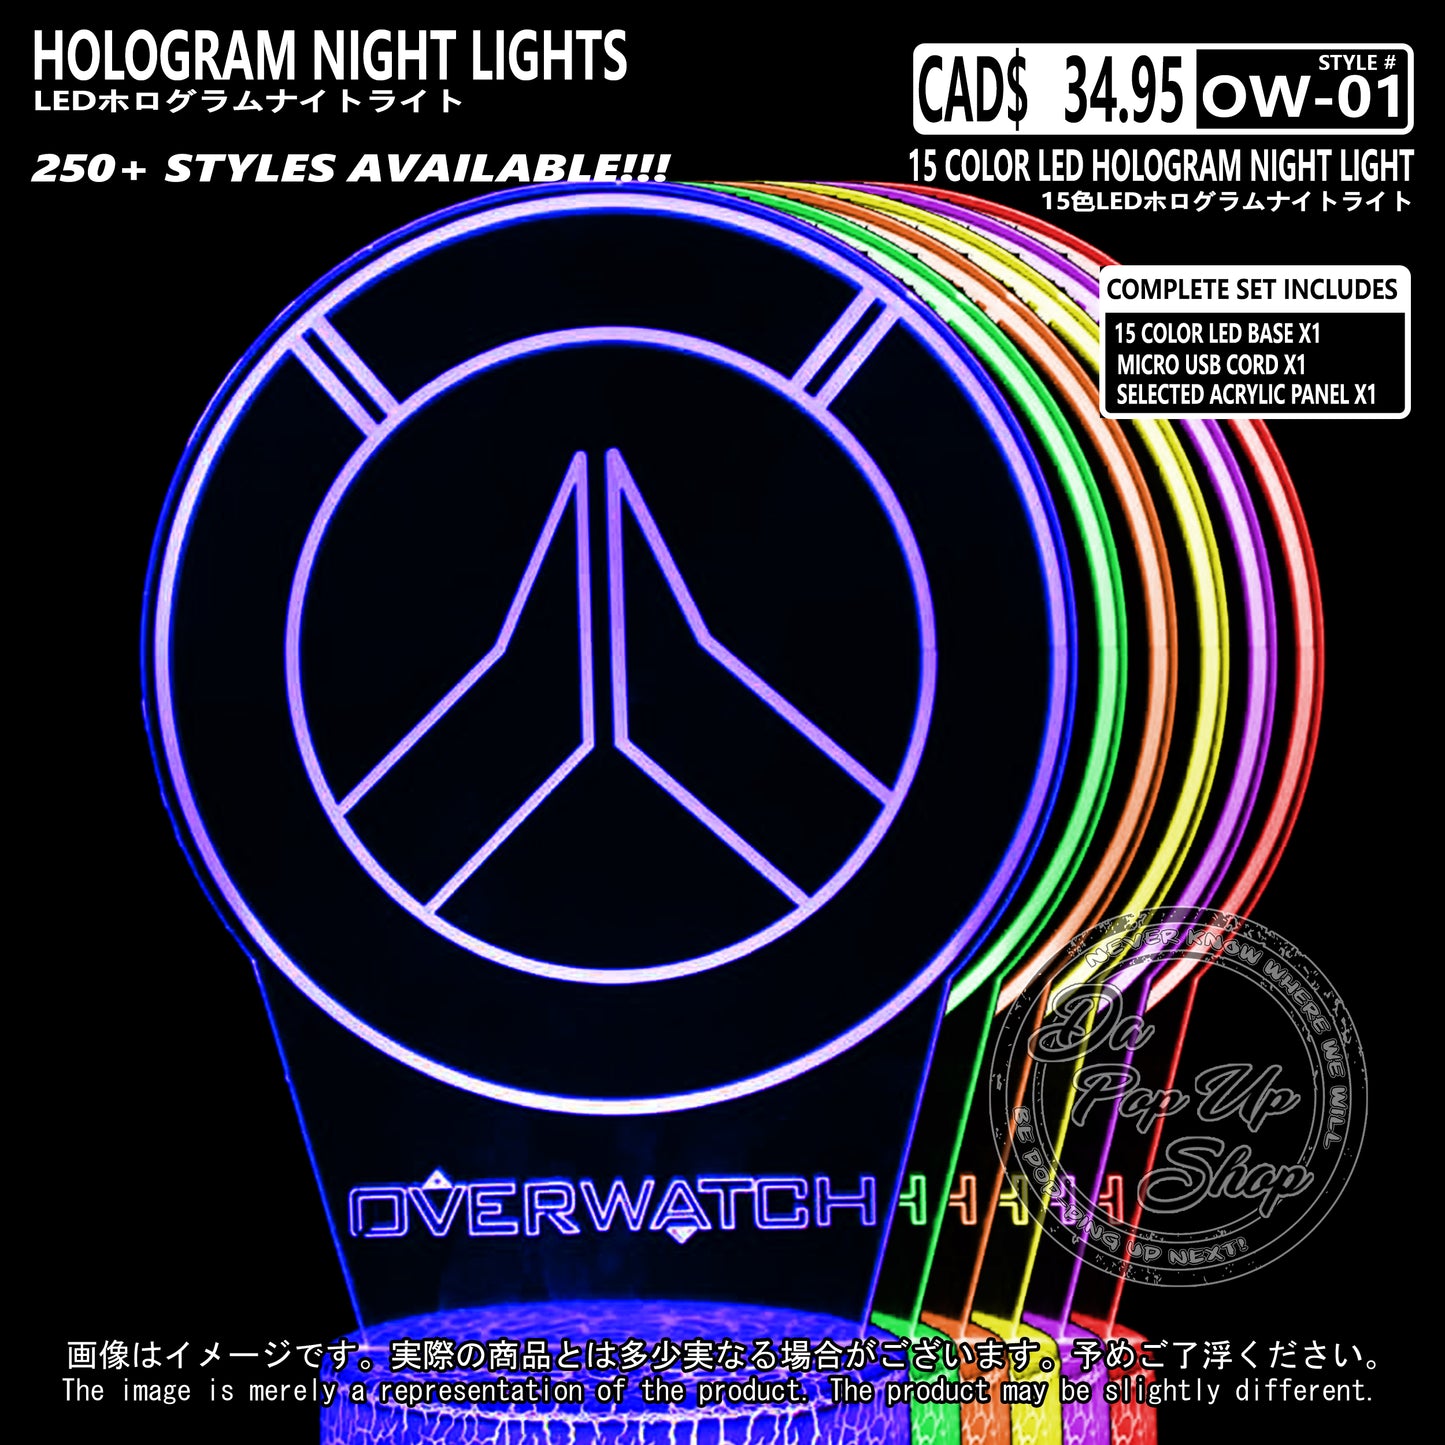 (OW-01) Overwatch Hologram LED Night Light